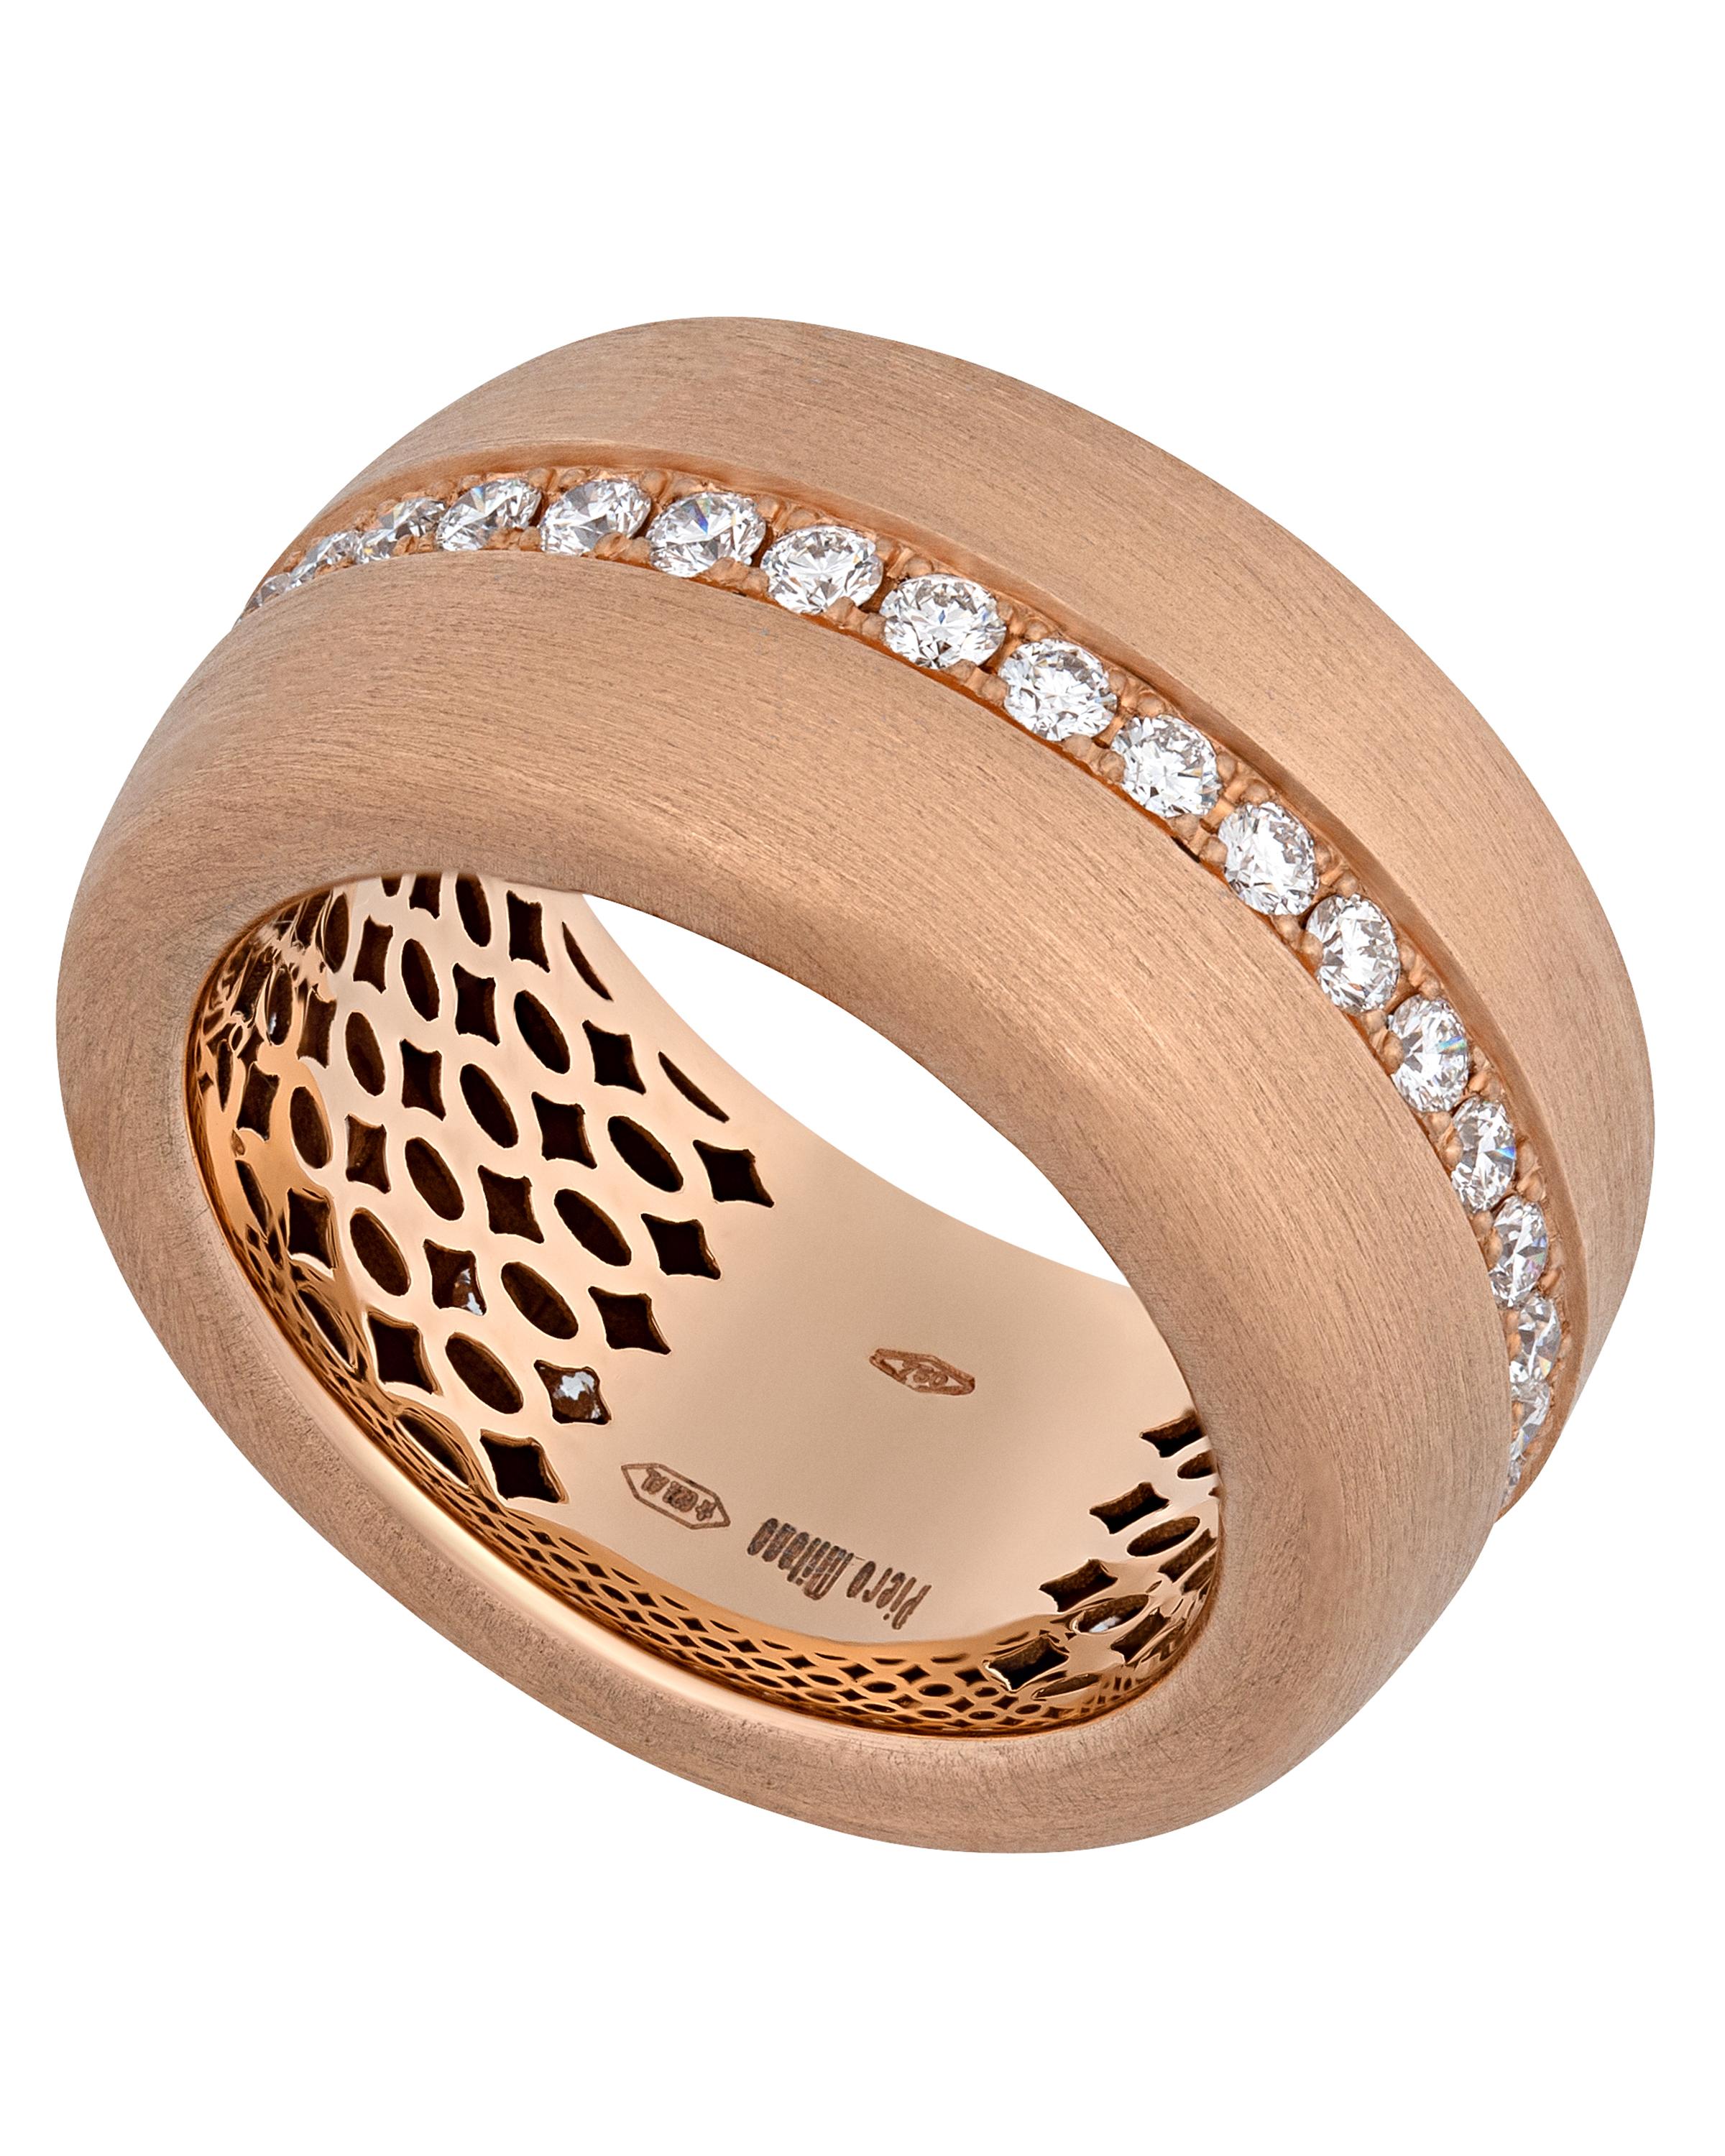 Contemporary Piero Milano 18K Rose Gold Diamond Ring Sz 7 For Sale